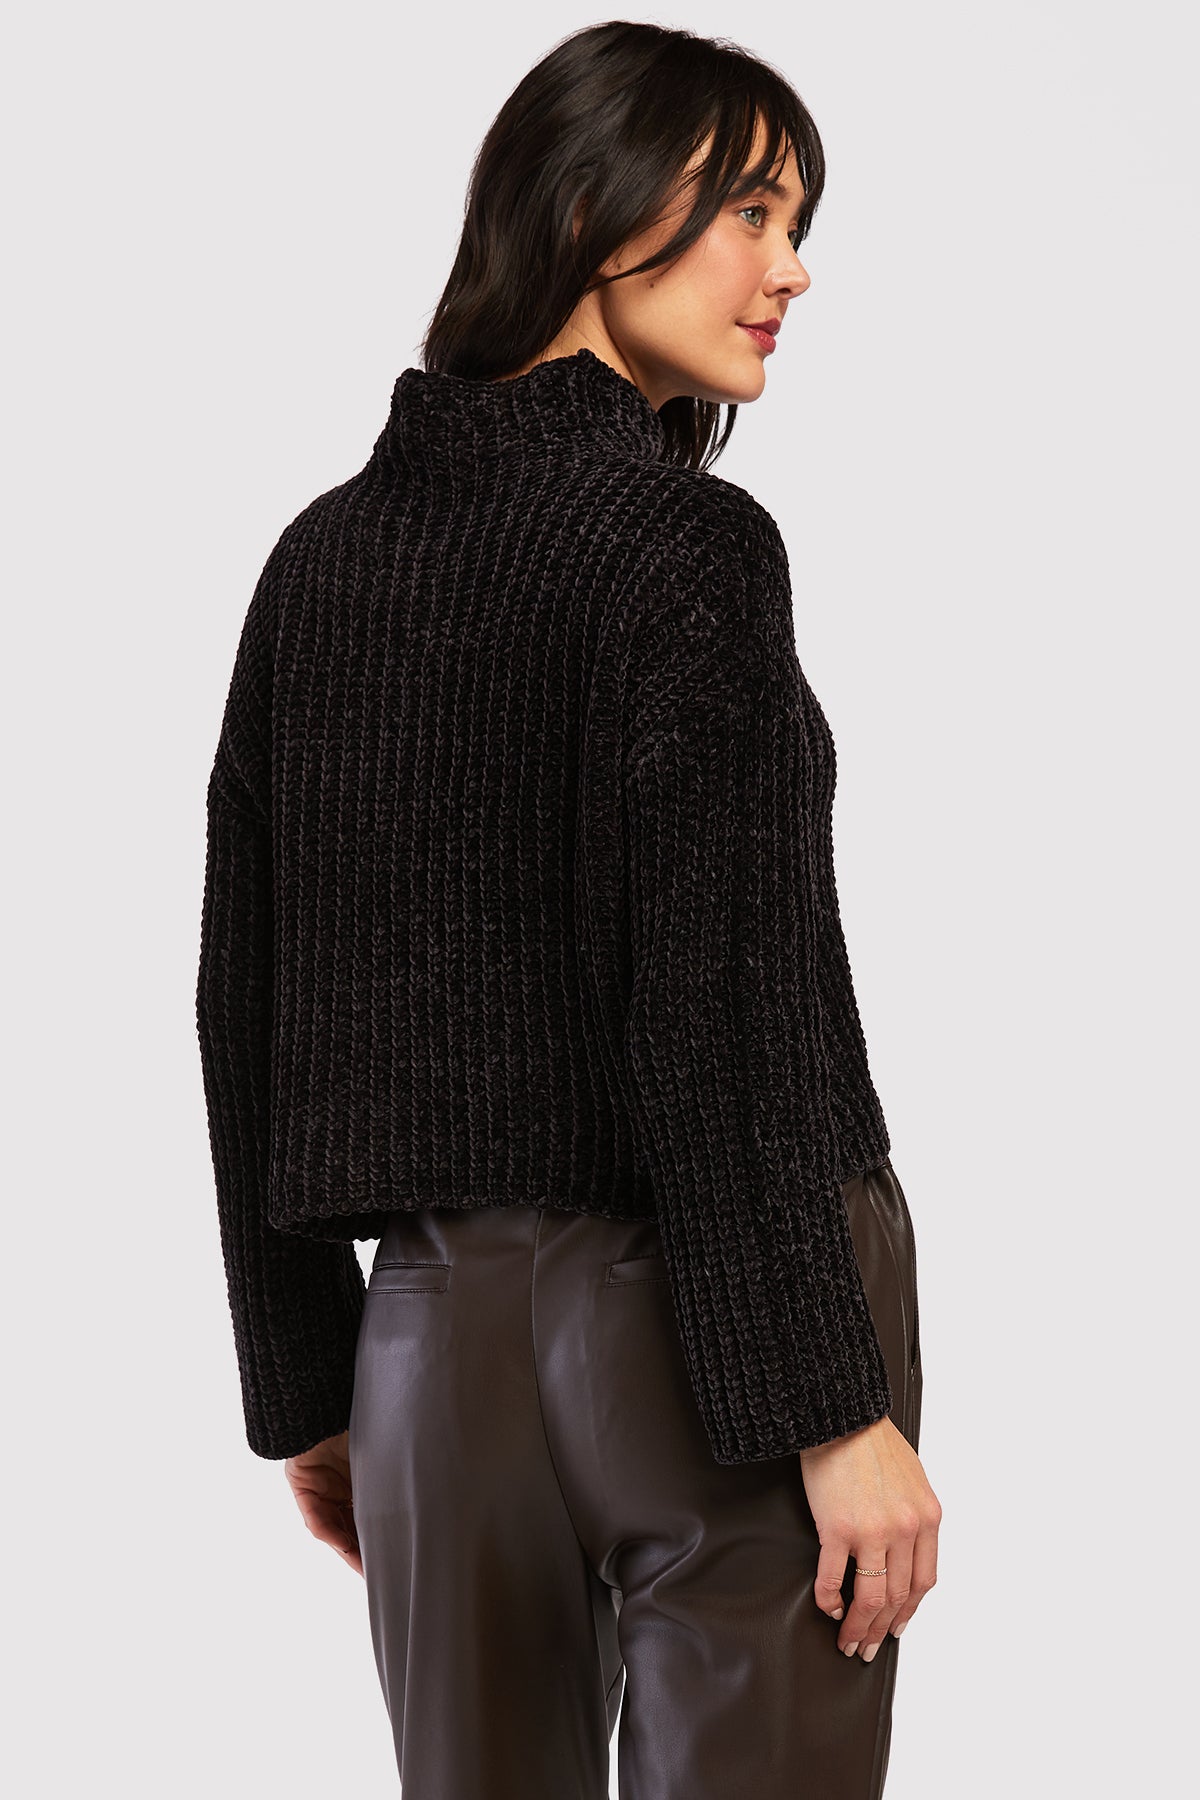 Juno Sweater - Black